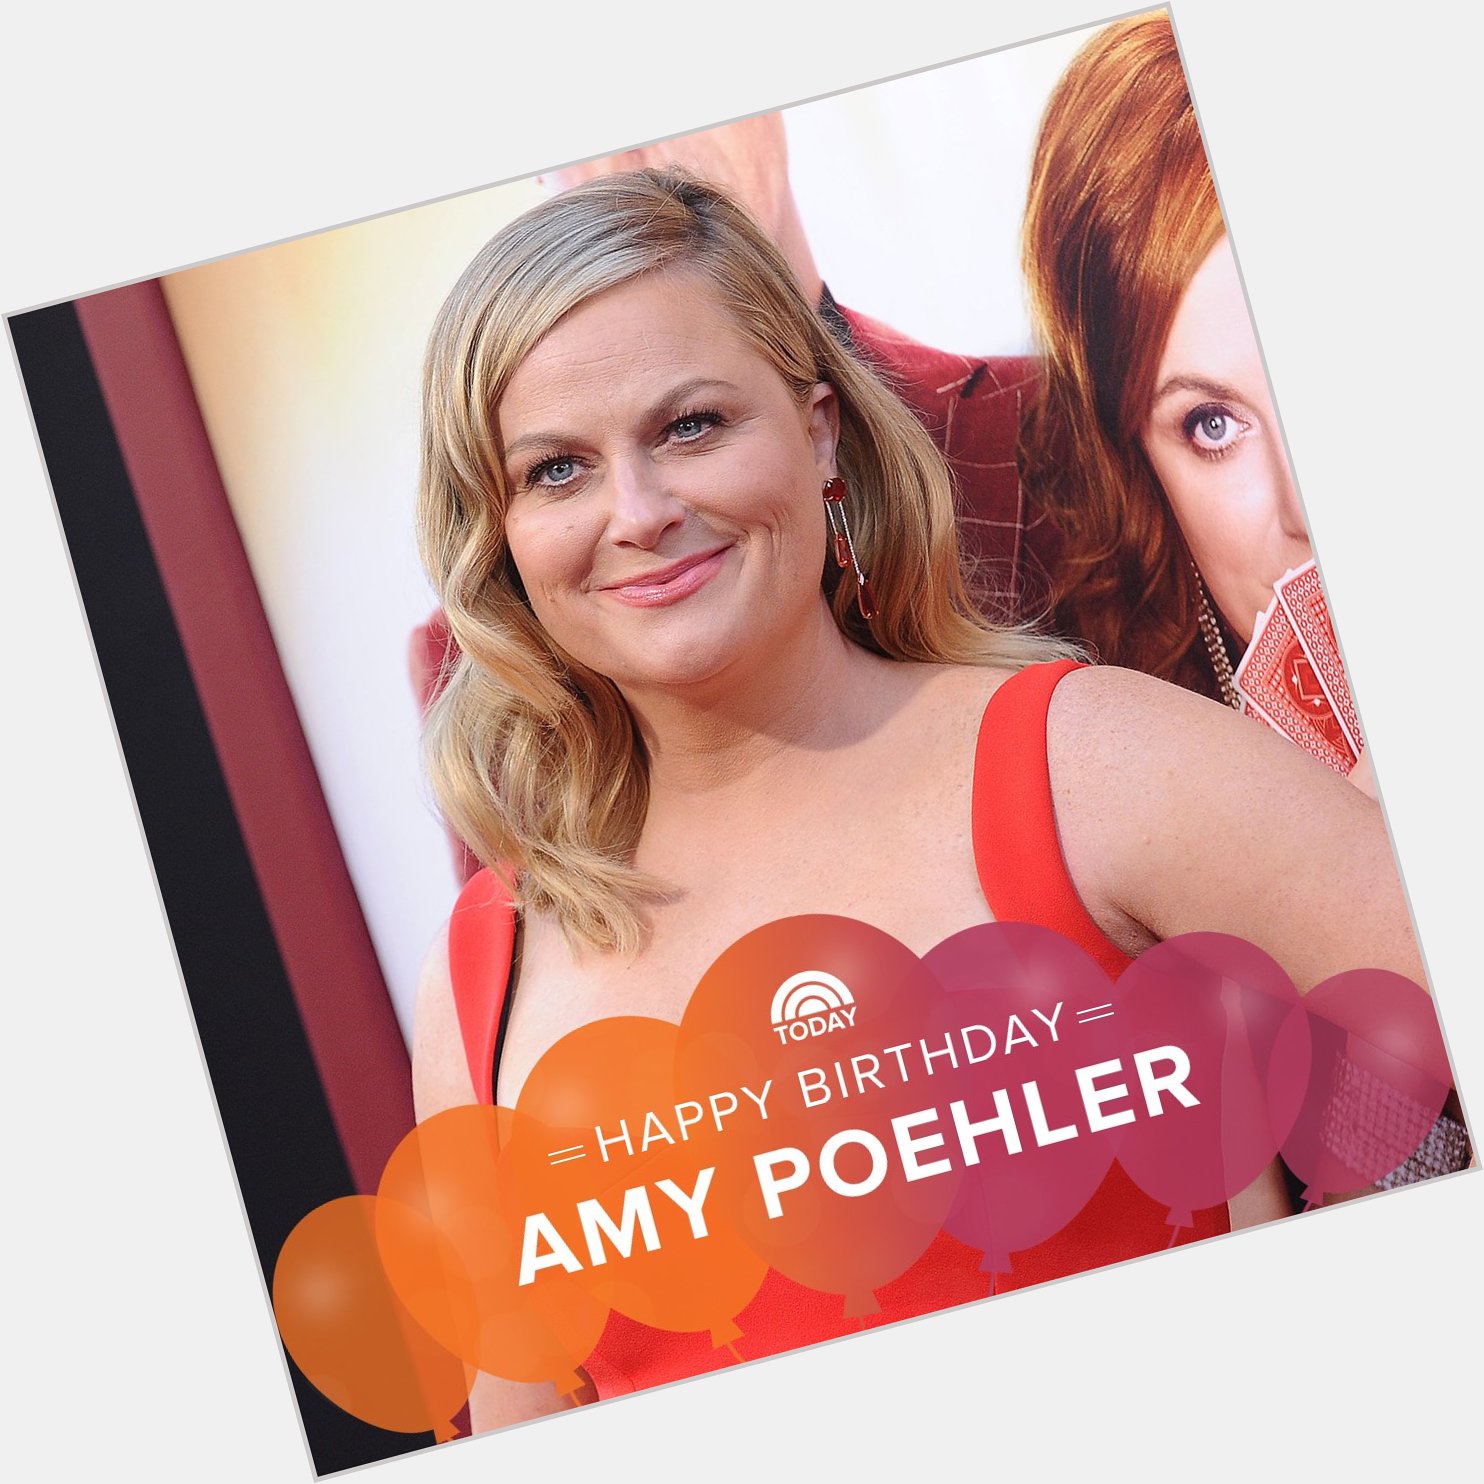 Happy birthday, Amy Poehler! 